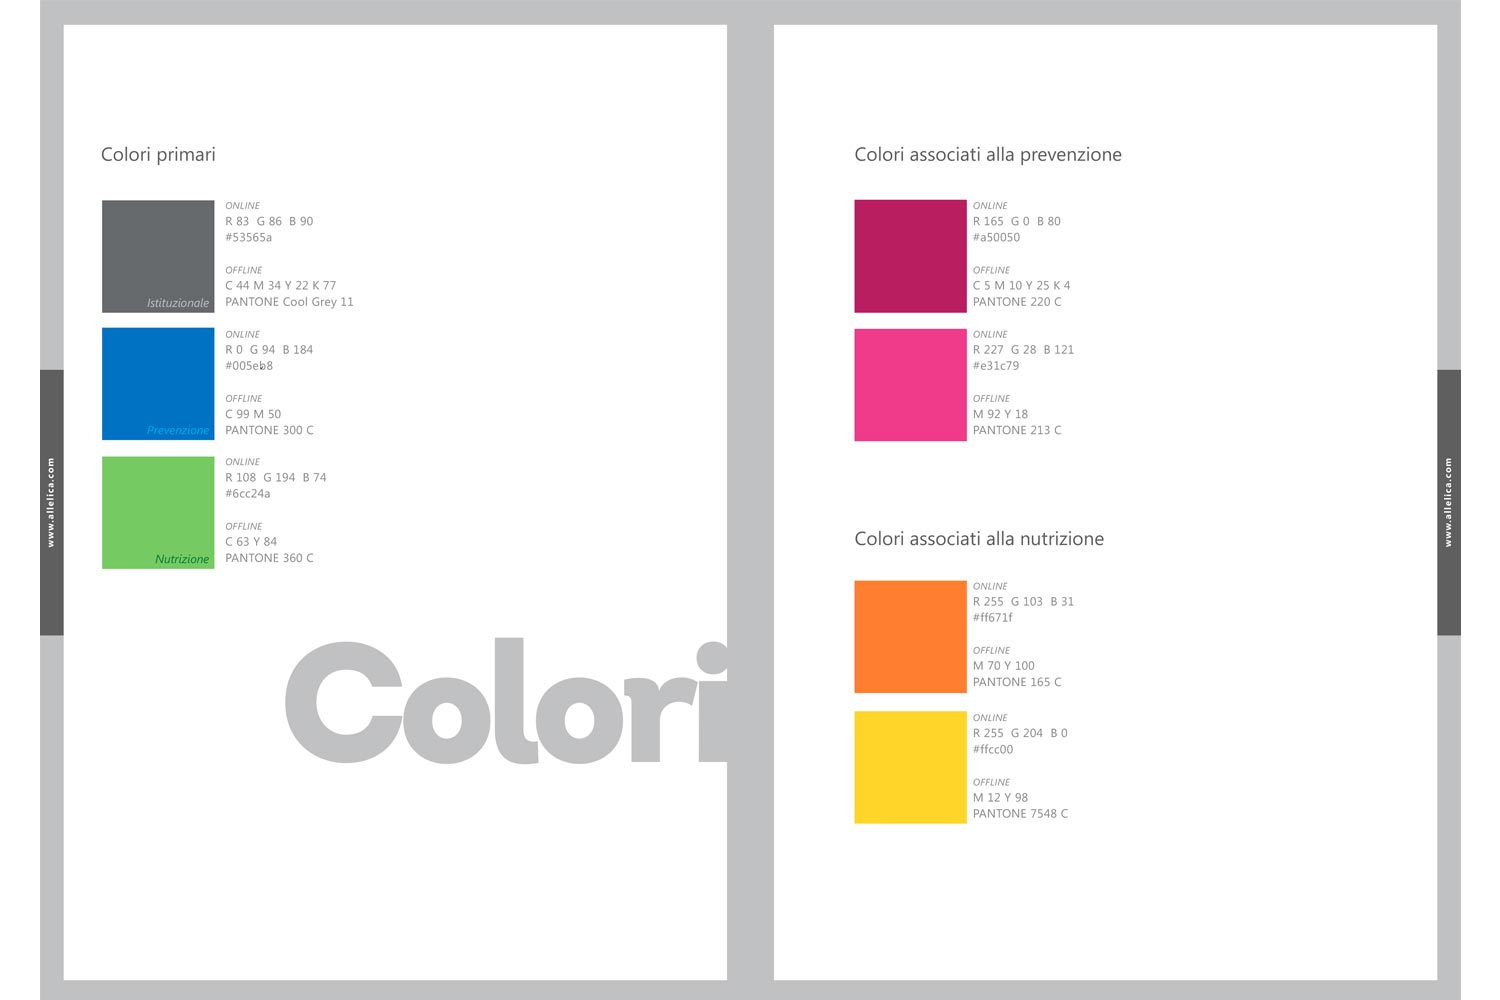 Color of the Allelica Corporate identity